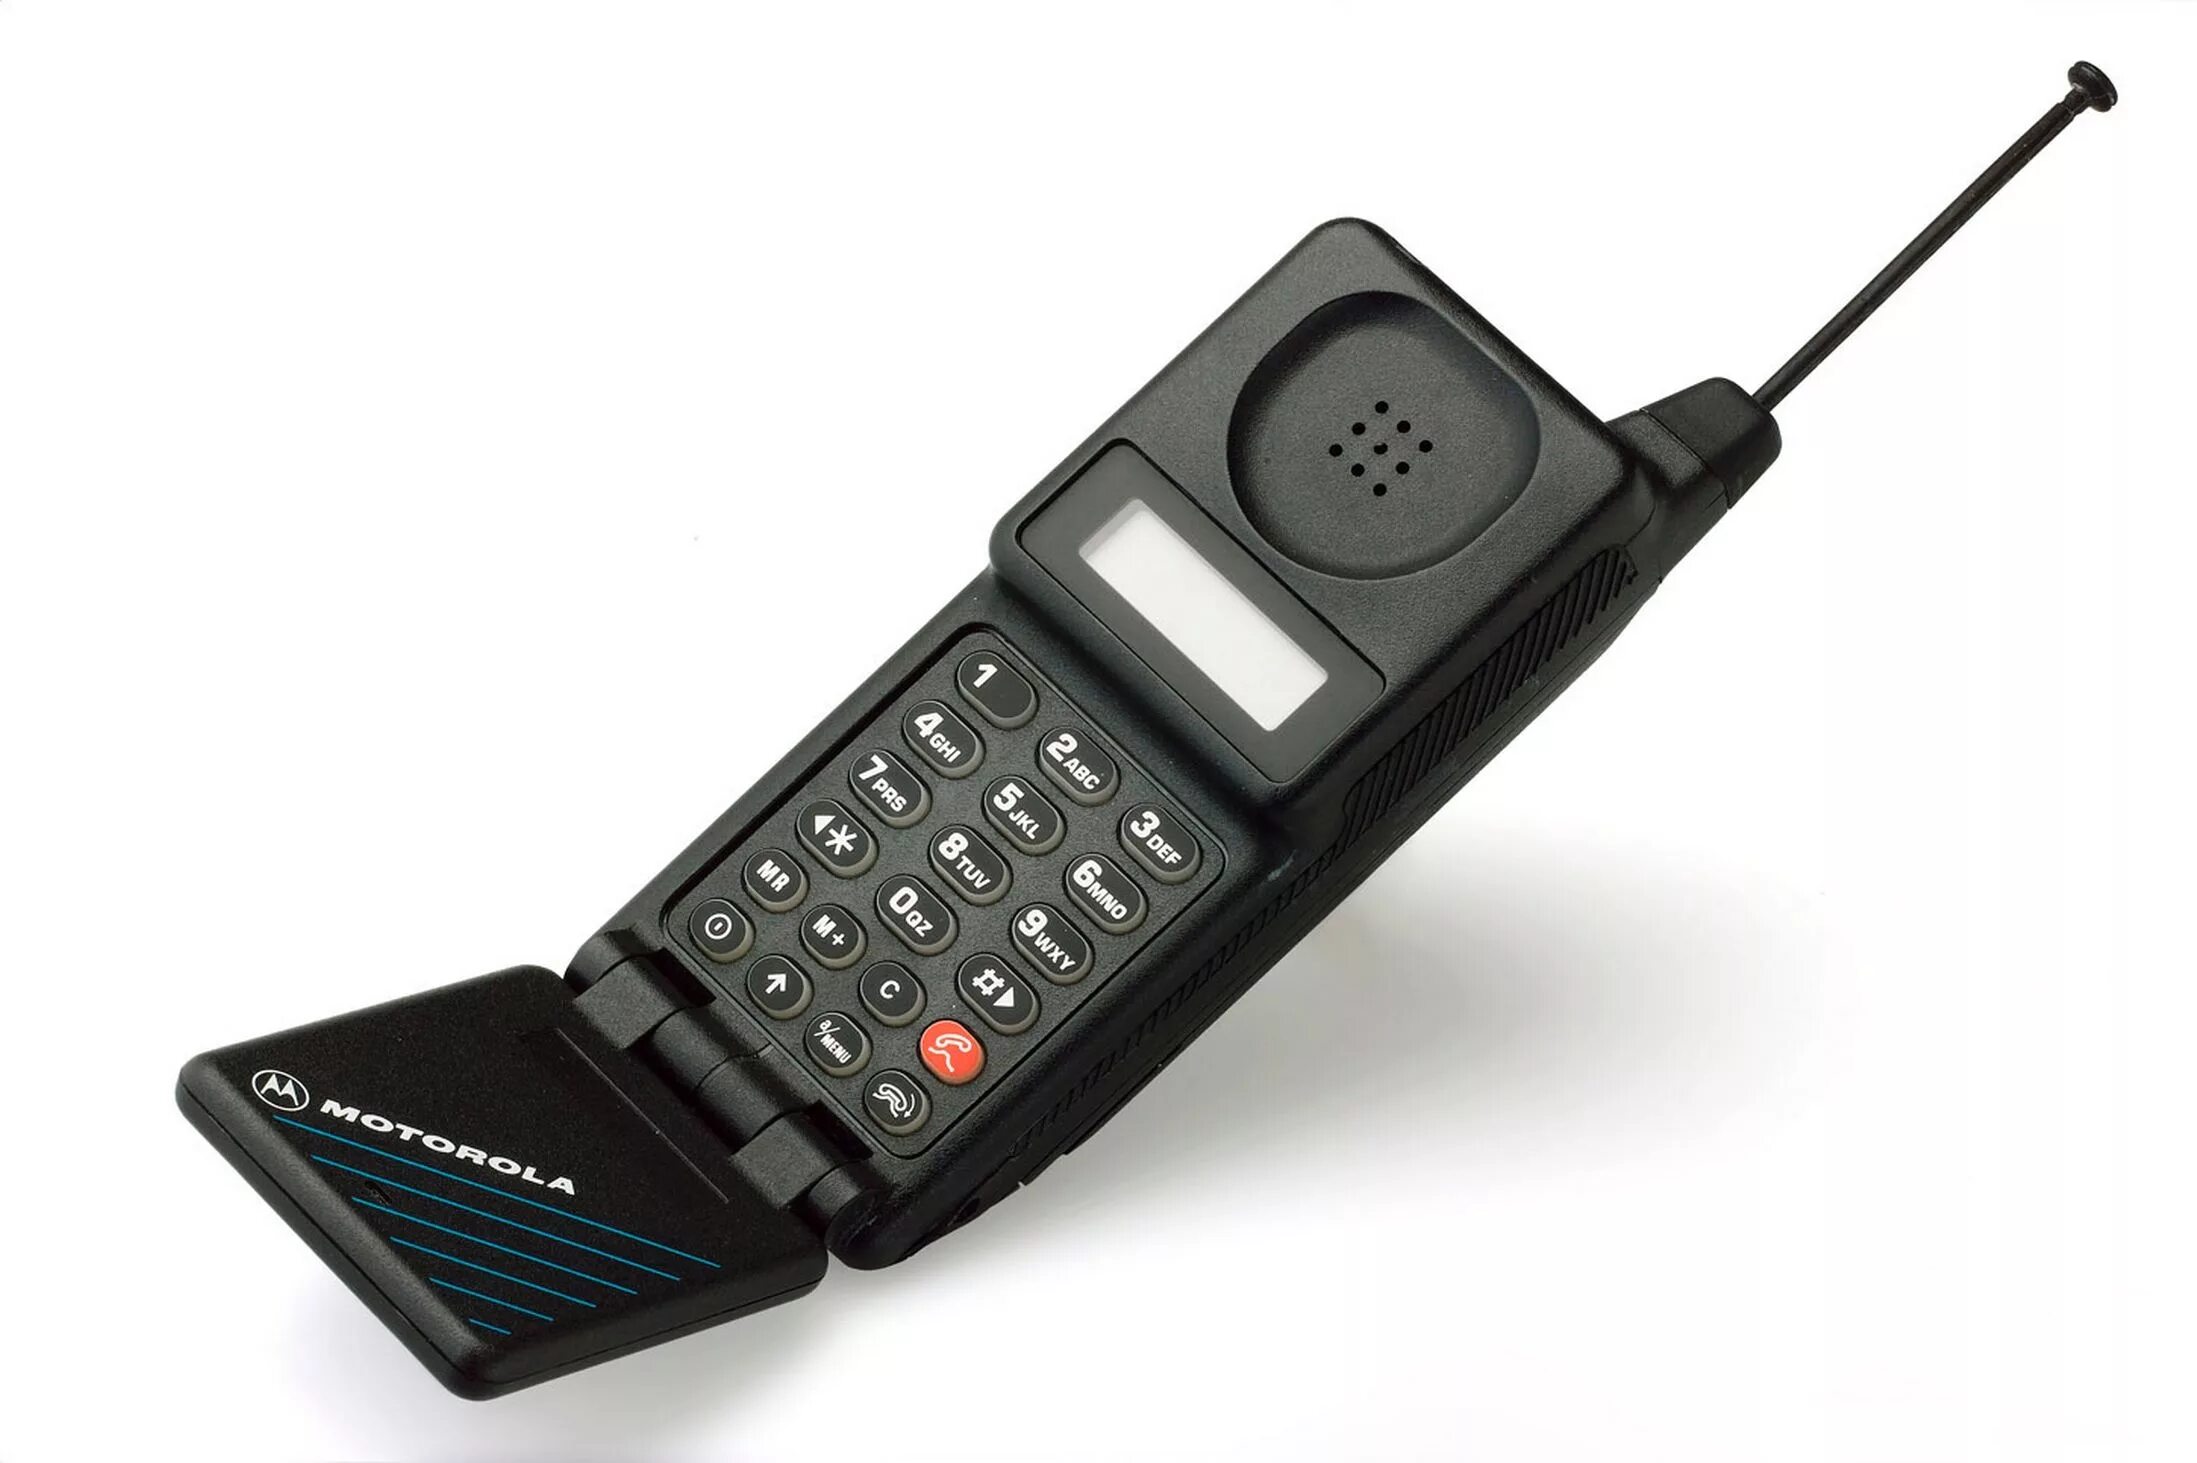 Motorola MICROTAC 9800x. Моторола микротак 9800. Motorola MICROTAC Classic. Motorola 1989. Моторола старые модели